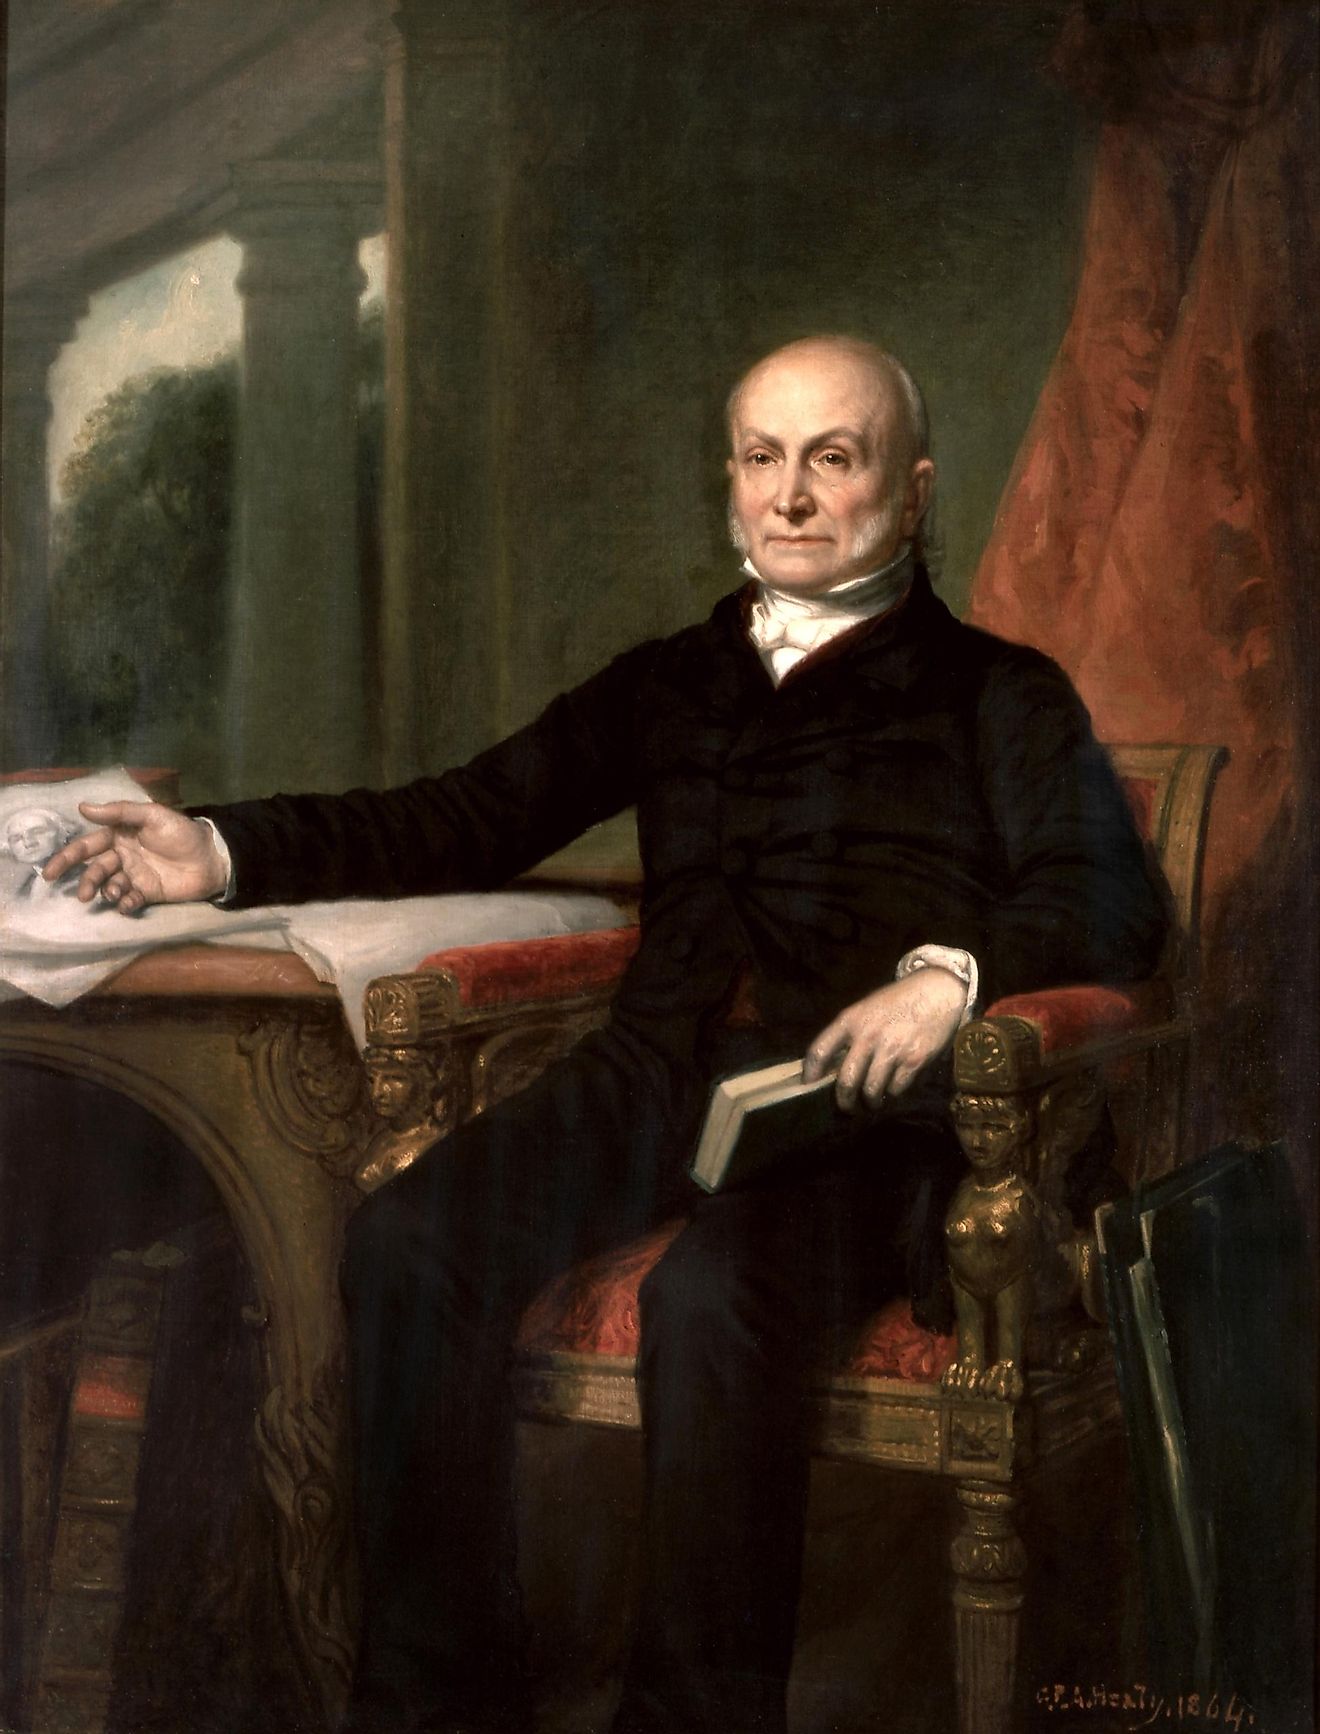 John Quincy Adams. Image credit: George Peter Alexander Healy/Public domain